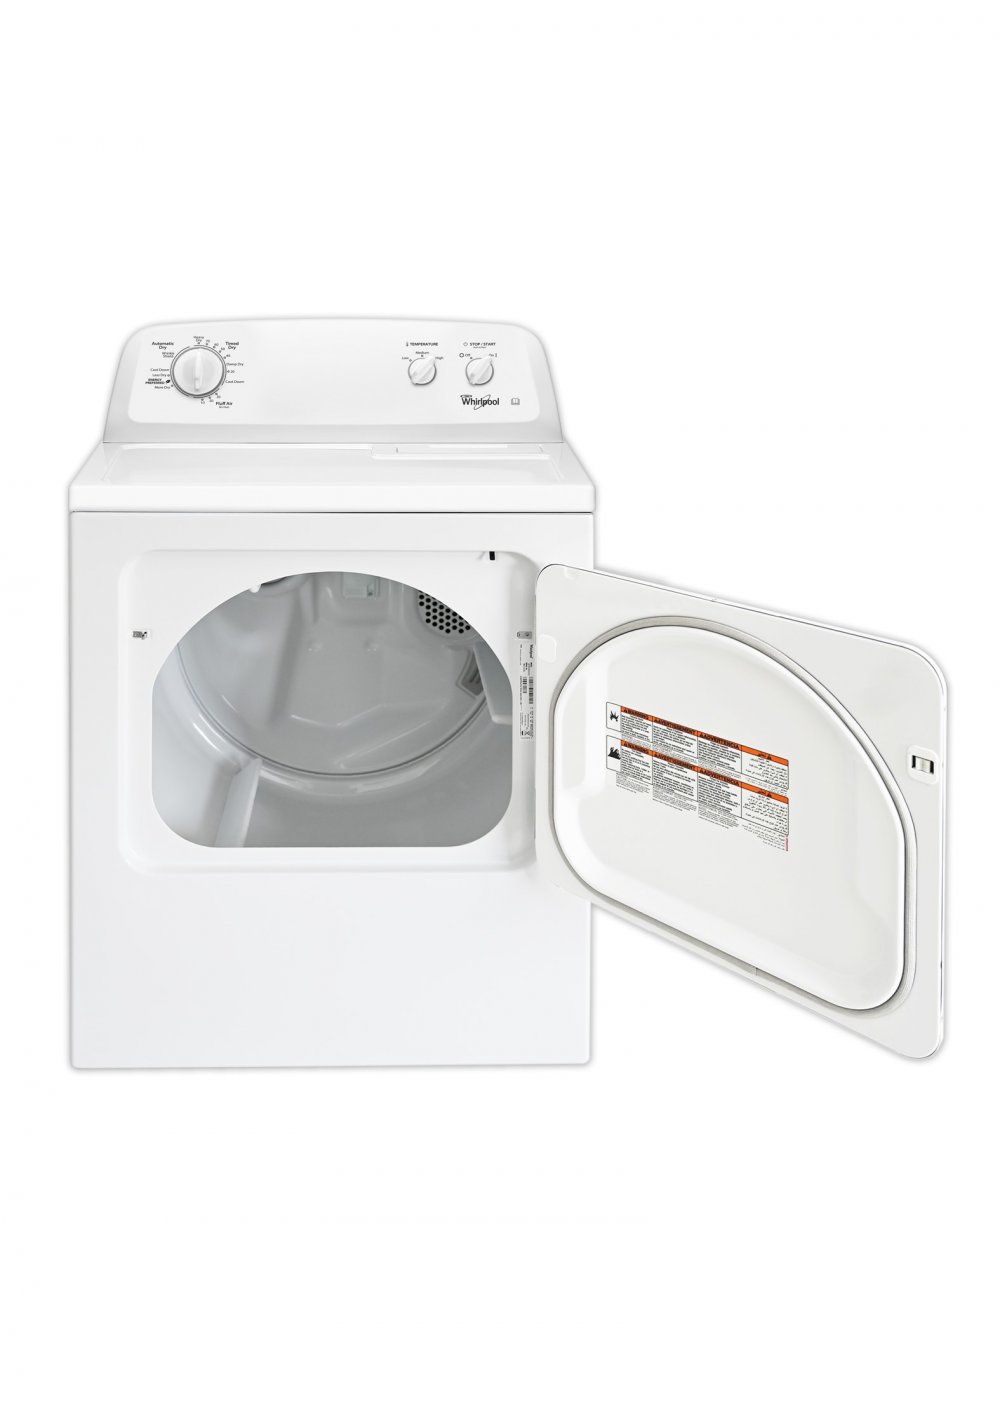 Dryer 7K,12P,3Knb-CP/Wh